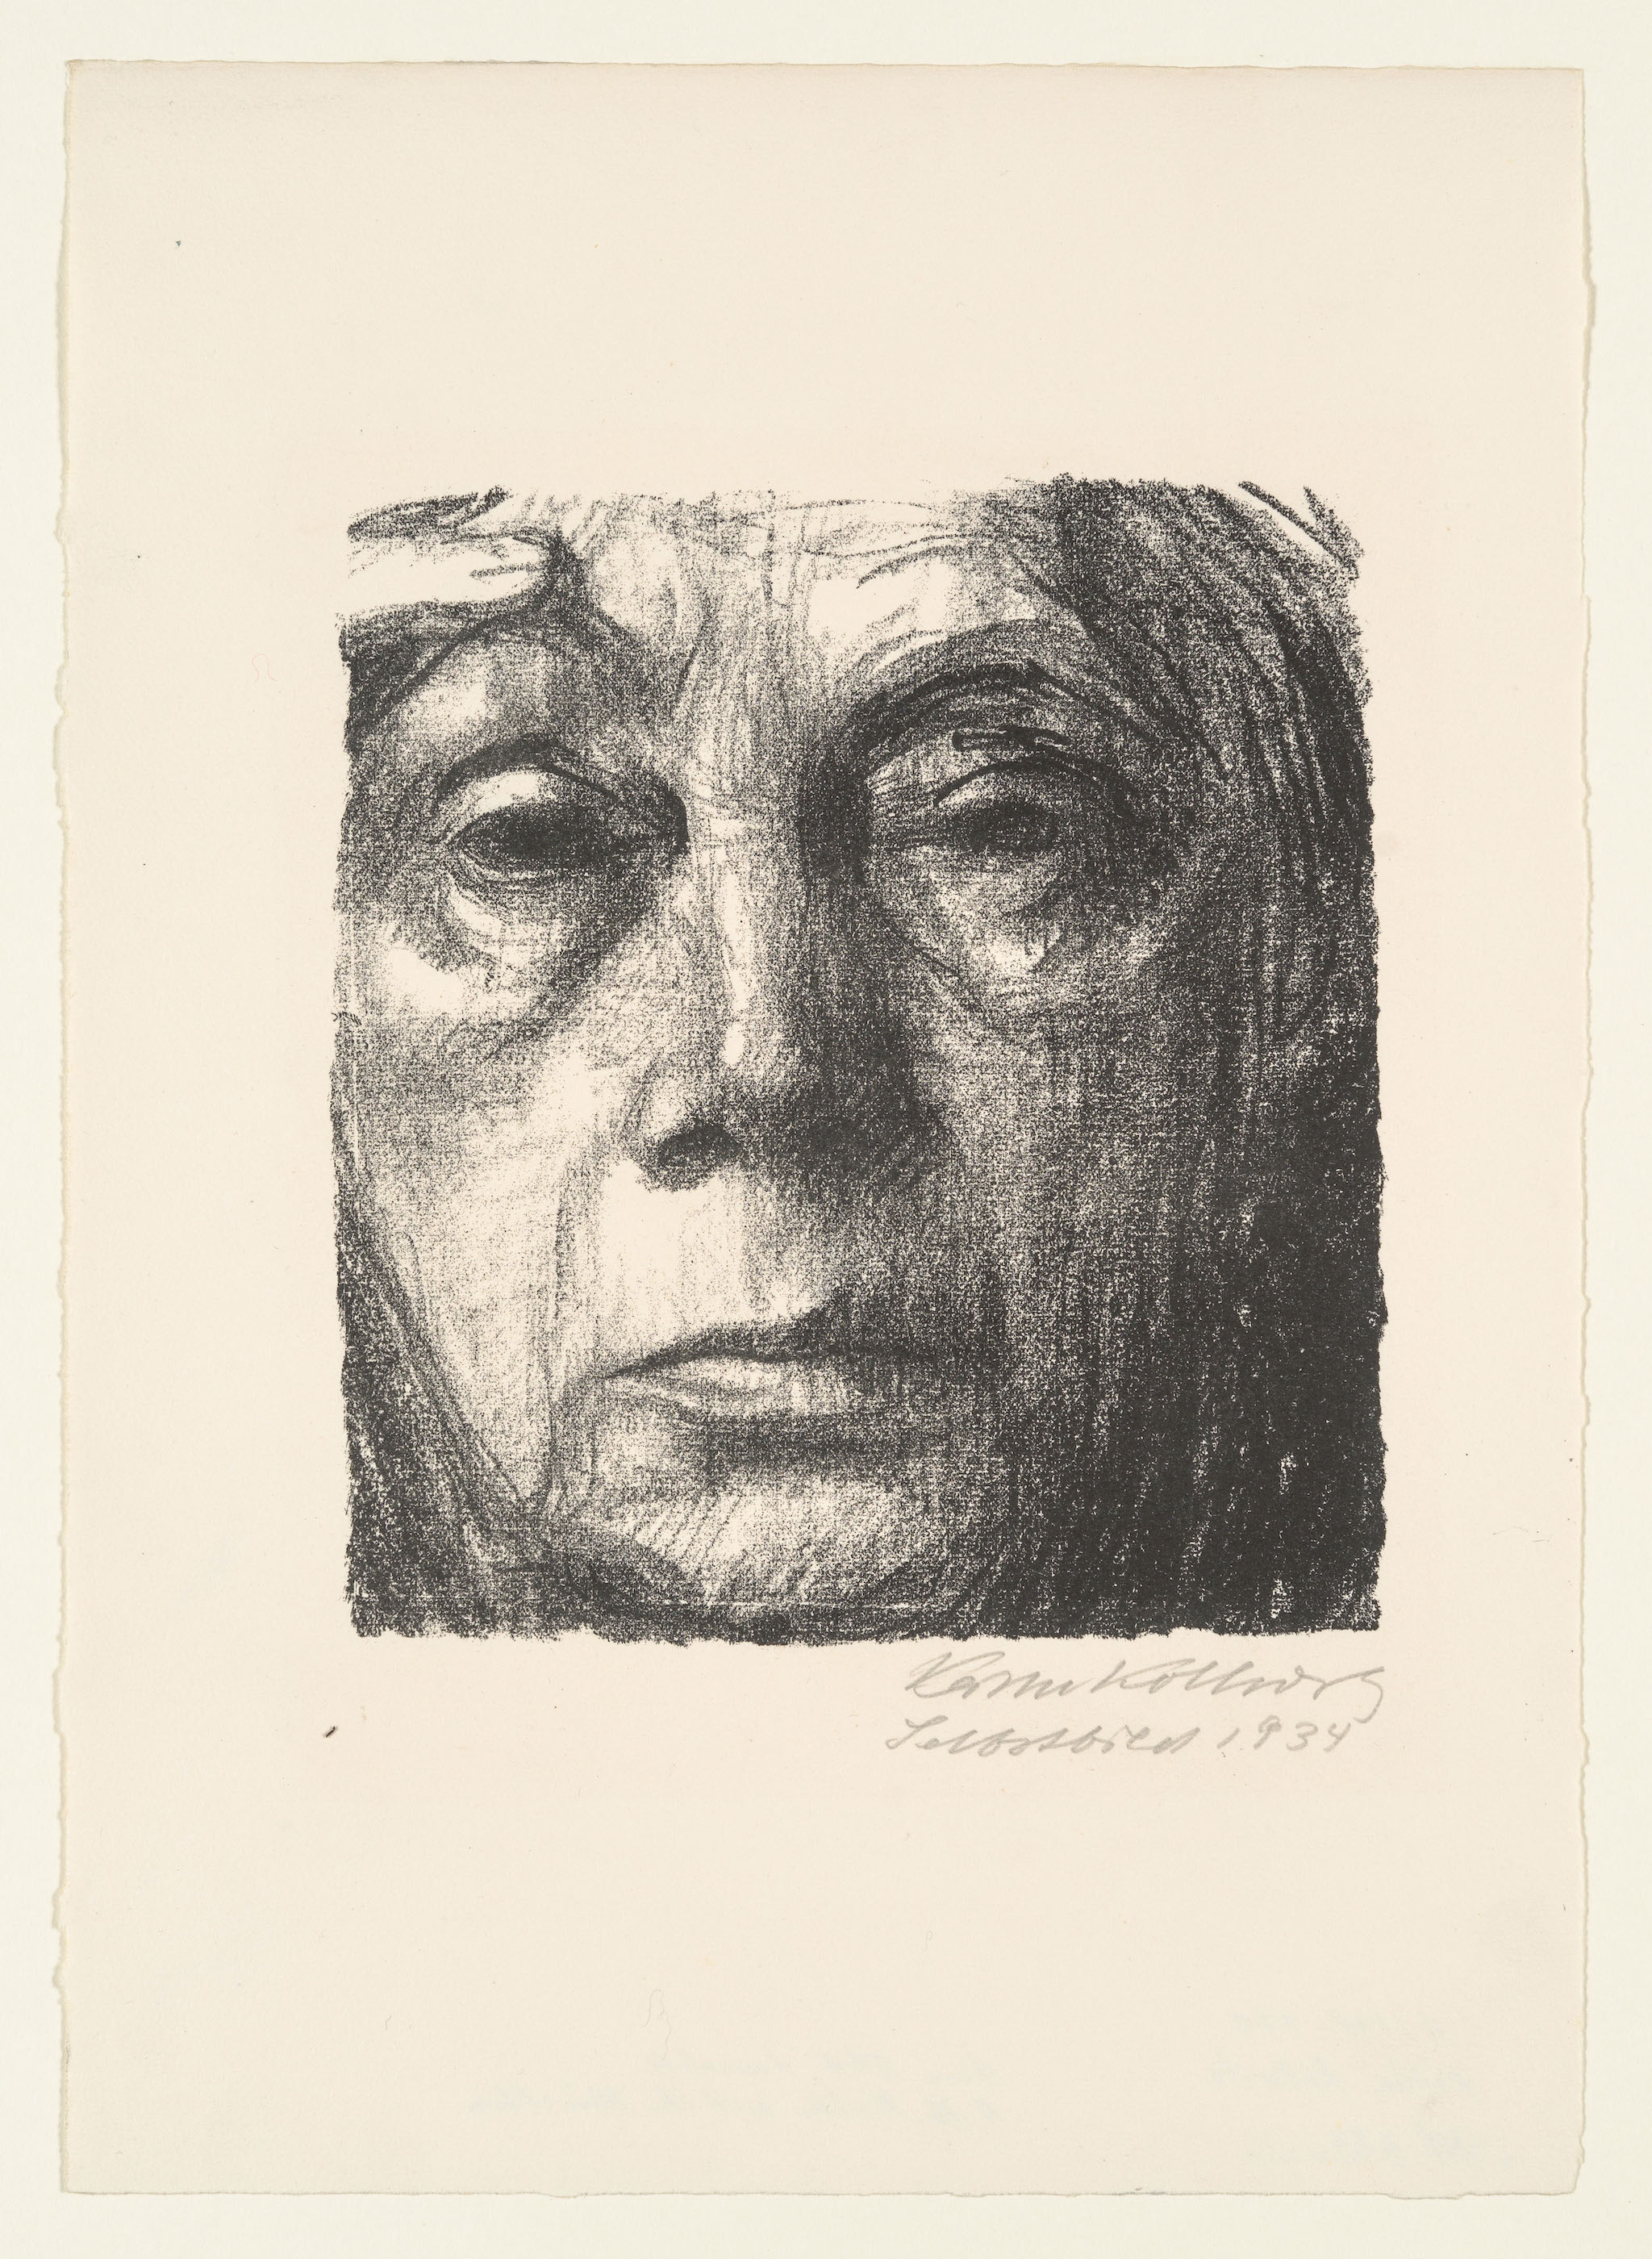 आत्म चित्र by Käthe Kollwitz - १९३४ - २०.८ x १८.७ सेमी 